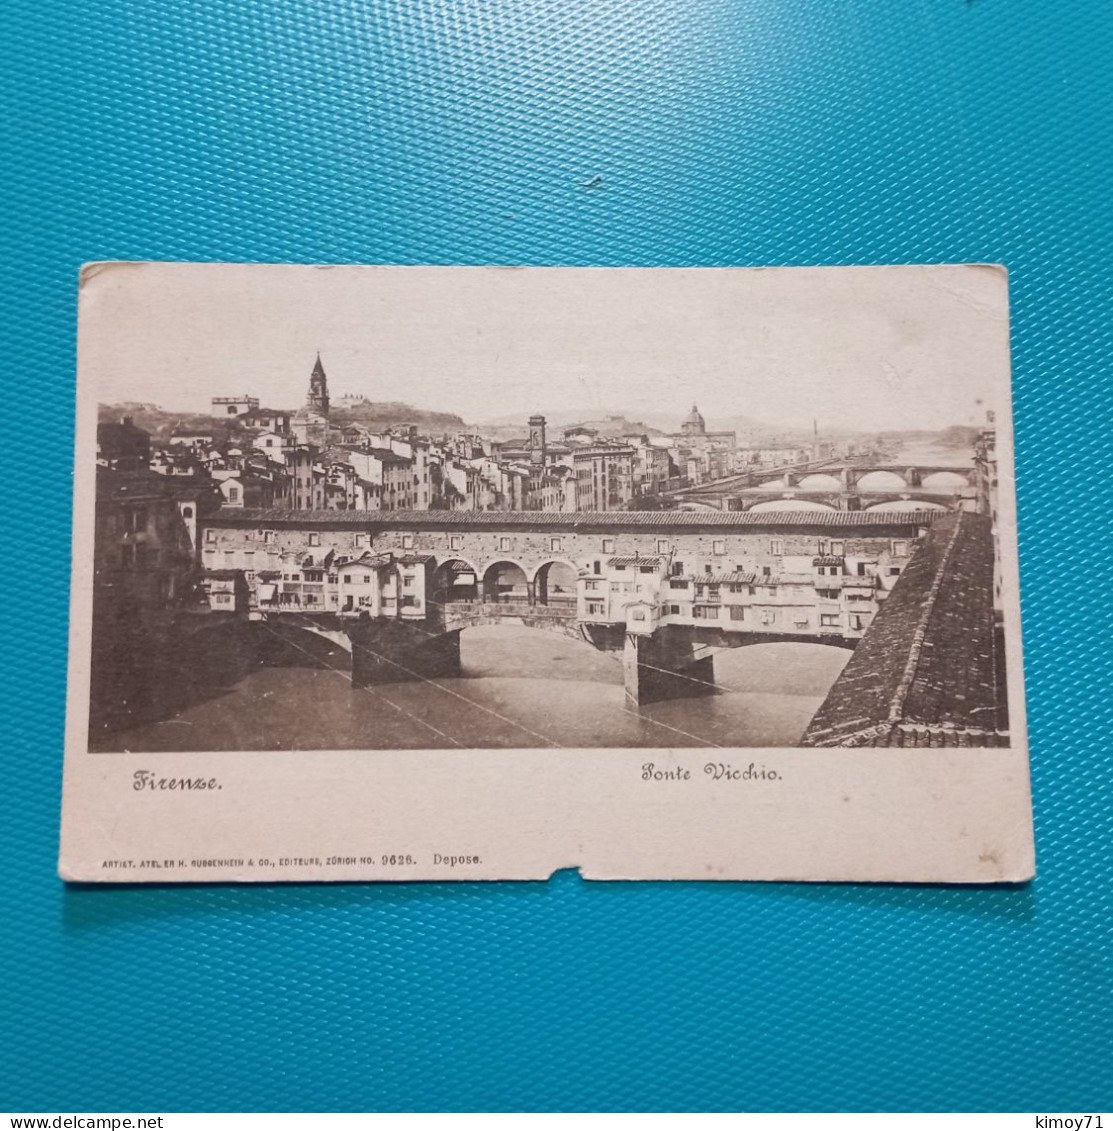 Cartolina Firenze - Ponte Vecchio. - Firenze (Florence)